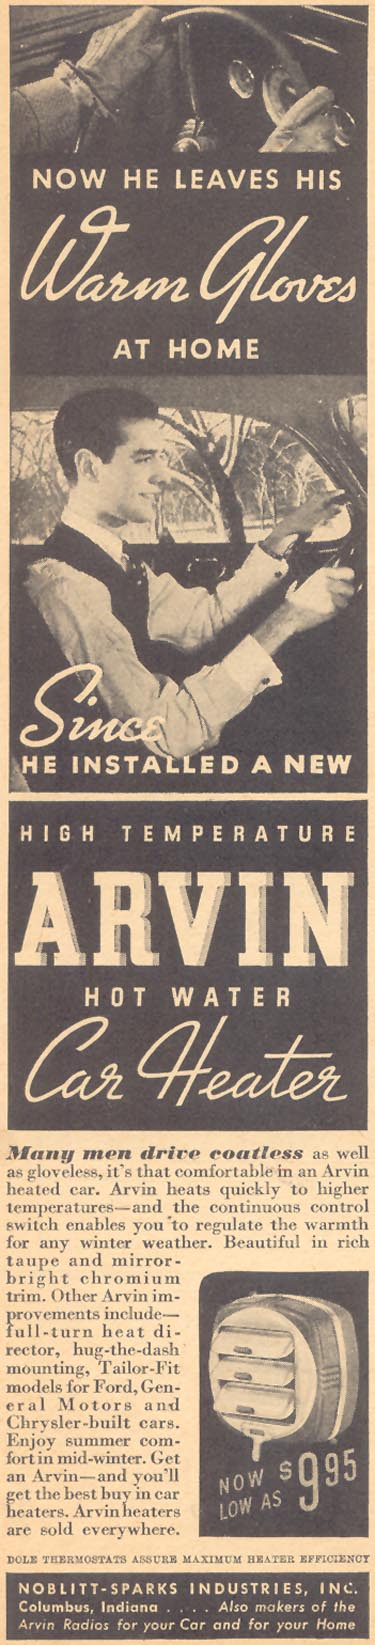 ARVIN HOT WATER CAR HEATER
LIBERTY
11/28/1936
p. 42